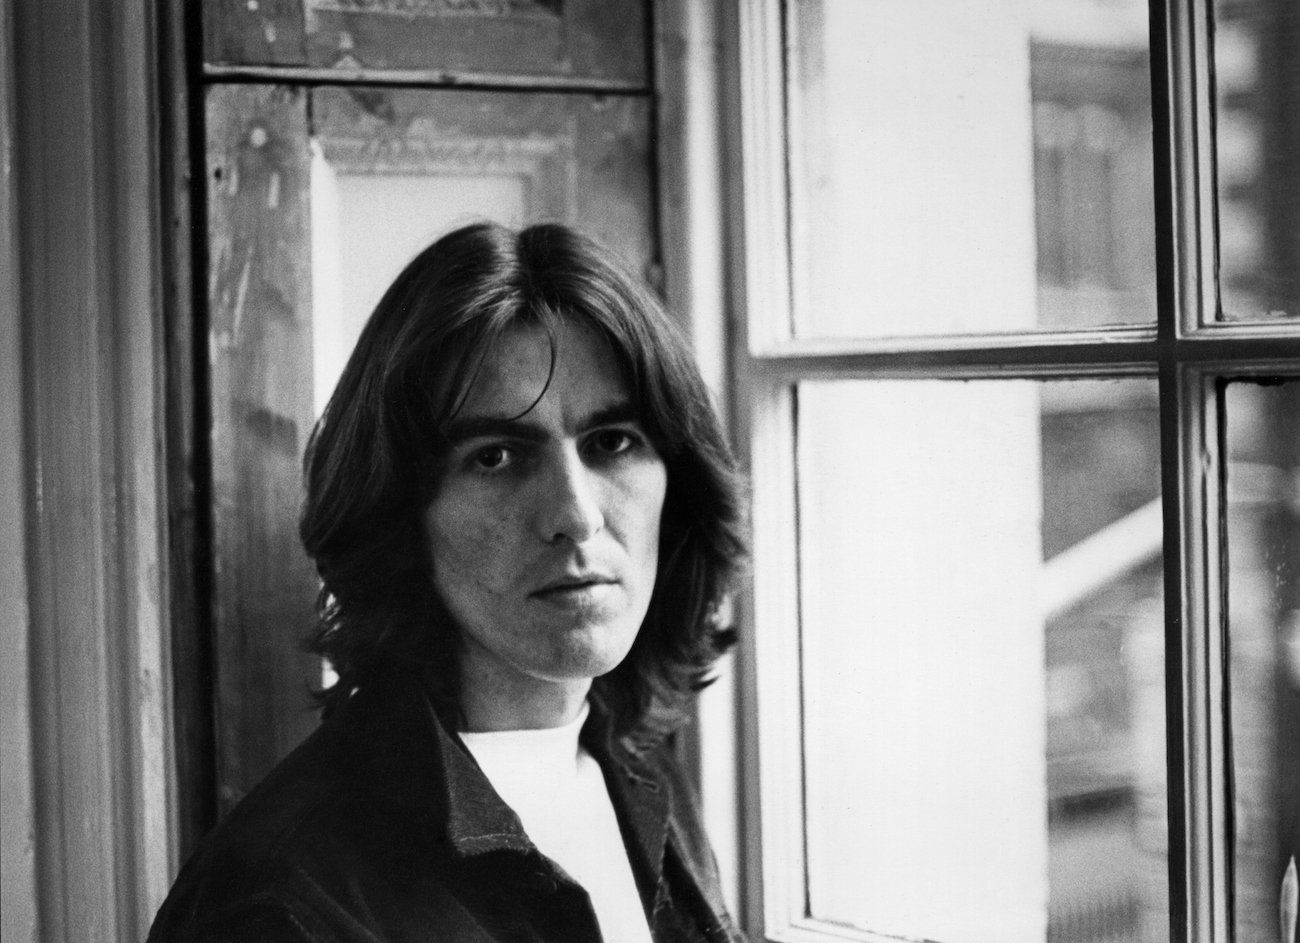 George Harrison posing at Apple headquarters, London, in 1969.